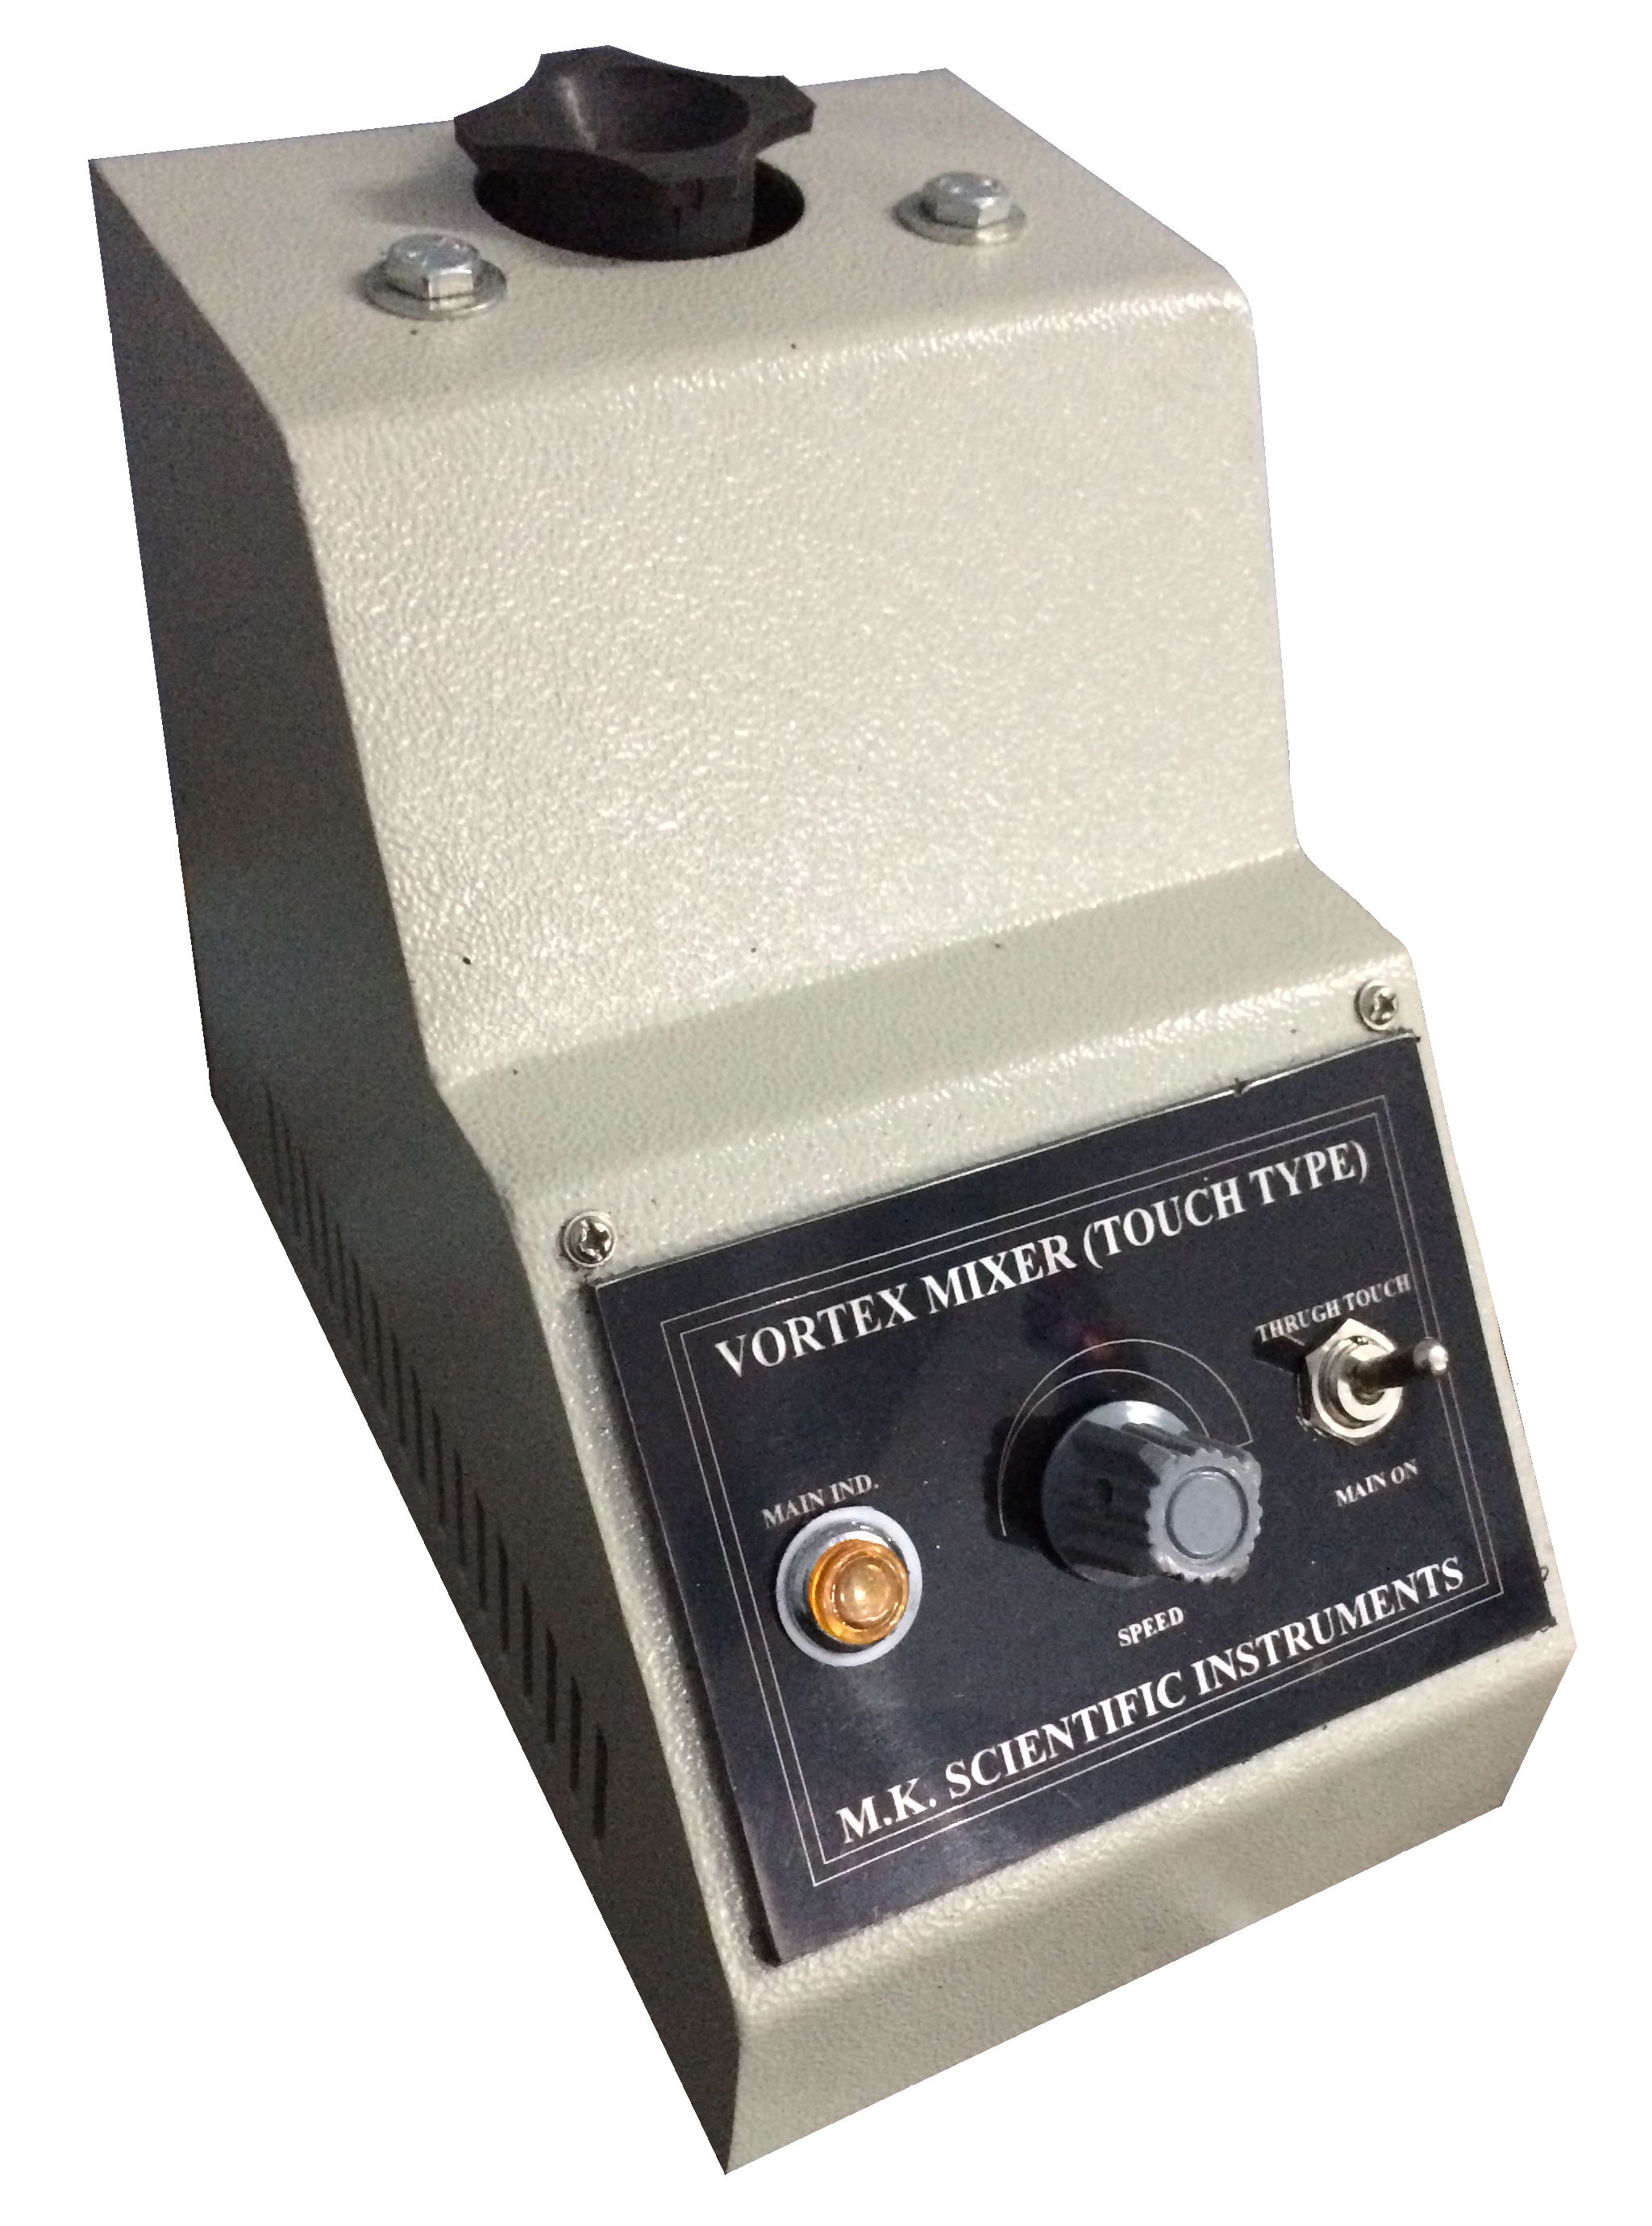 MKSI-151 Vortex Mixer